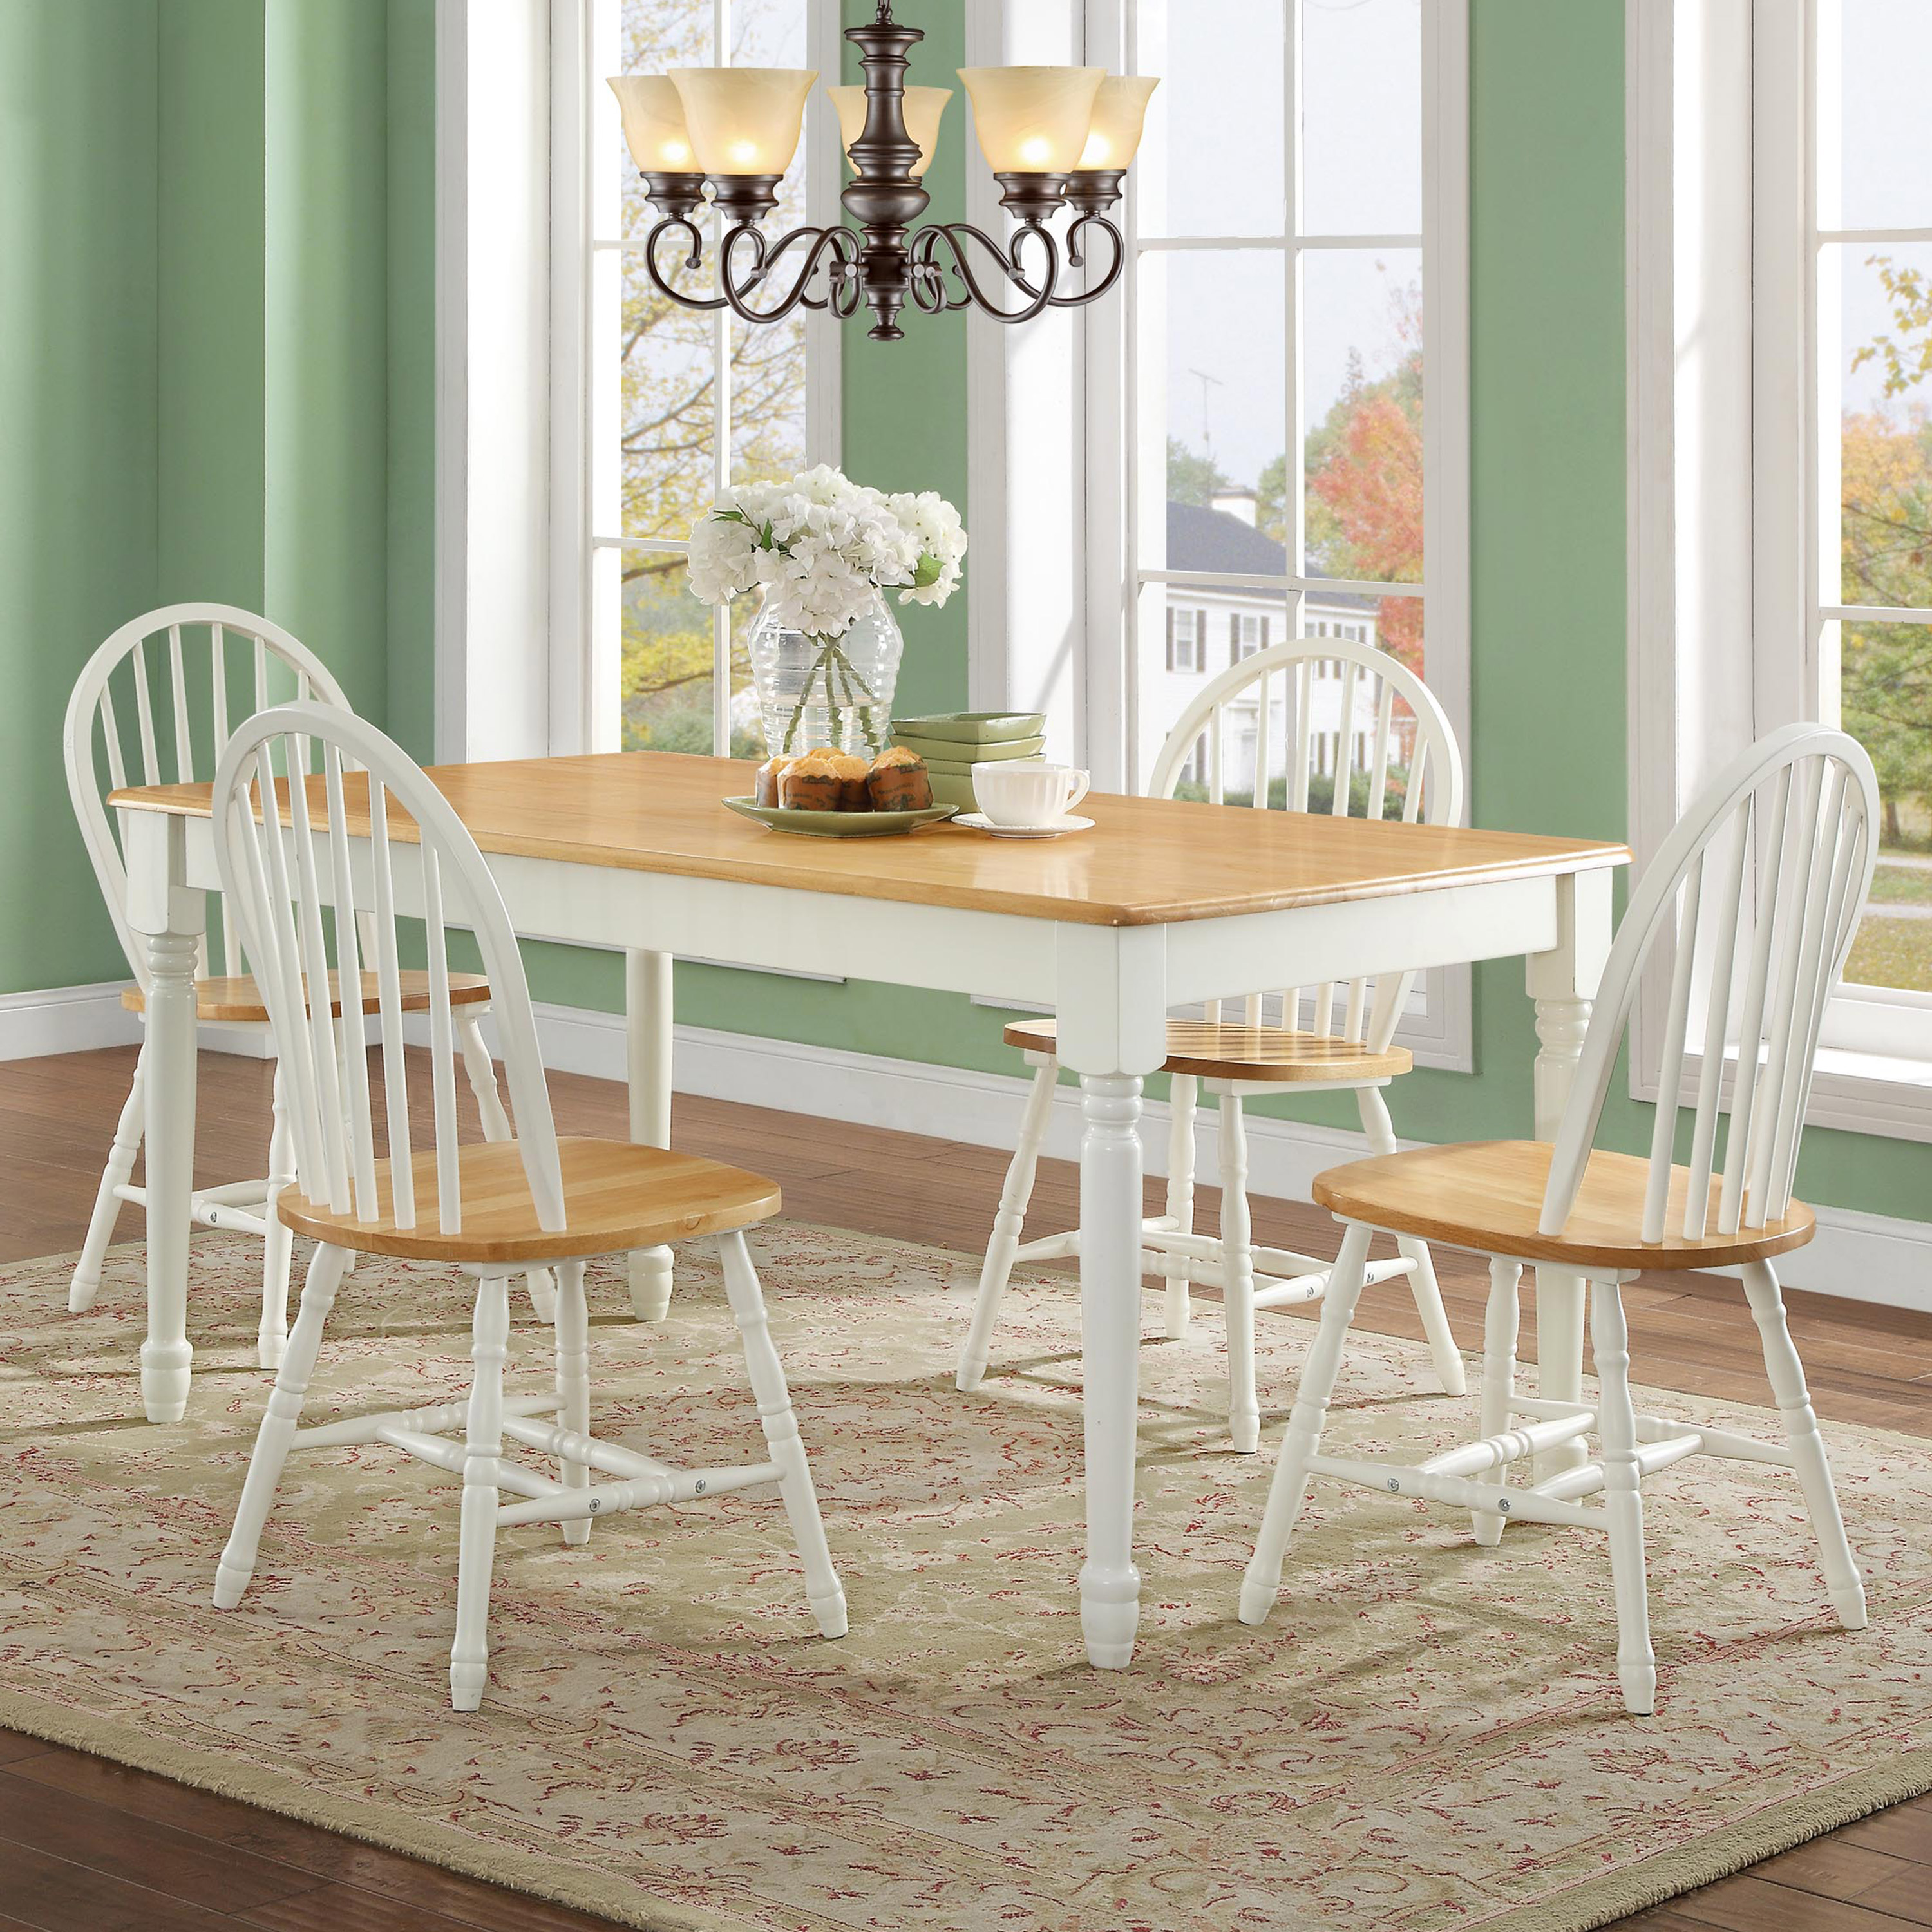 Autumn Lane Windsor Dining Chairs, White/Oak (Set of 2)